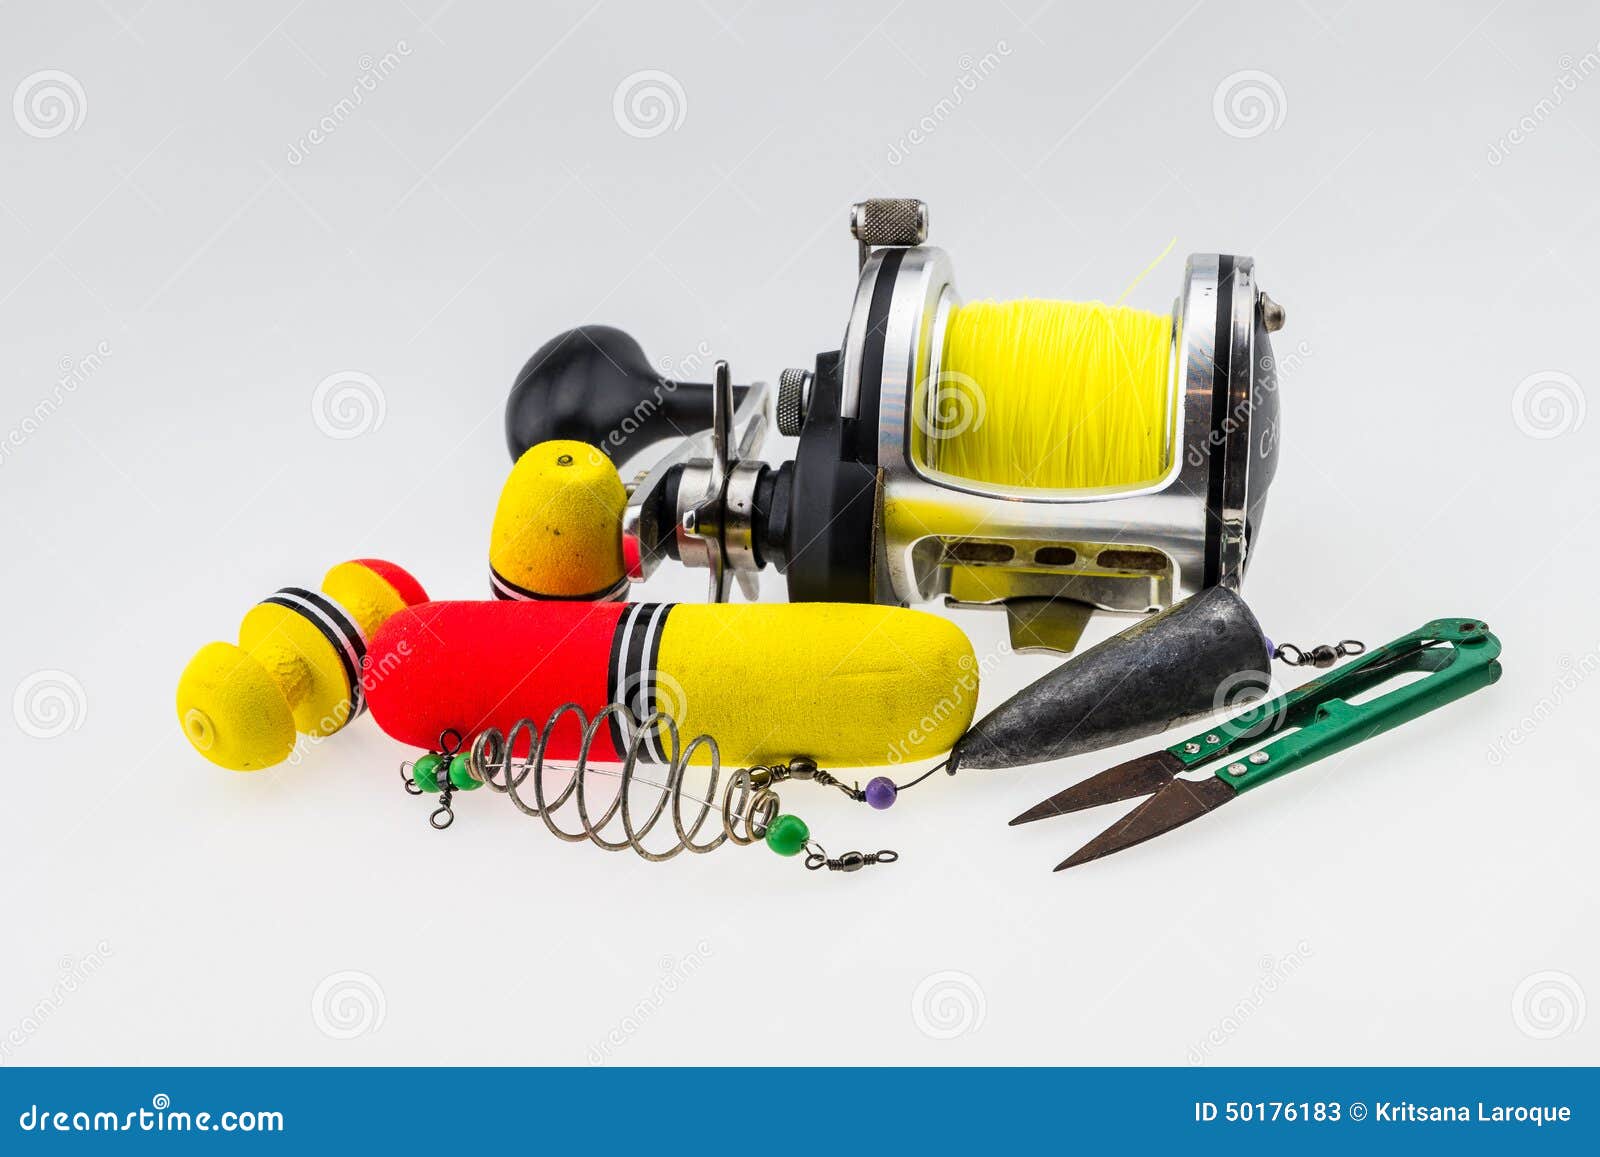 Fishing Tackle on White Background Stock Image - Image of knife, equipment:  50176183